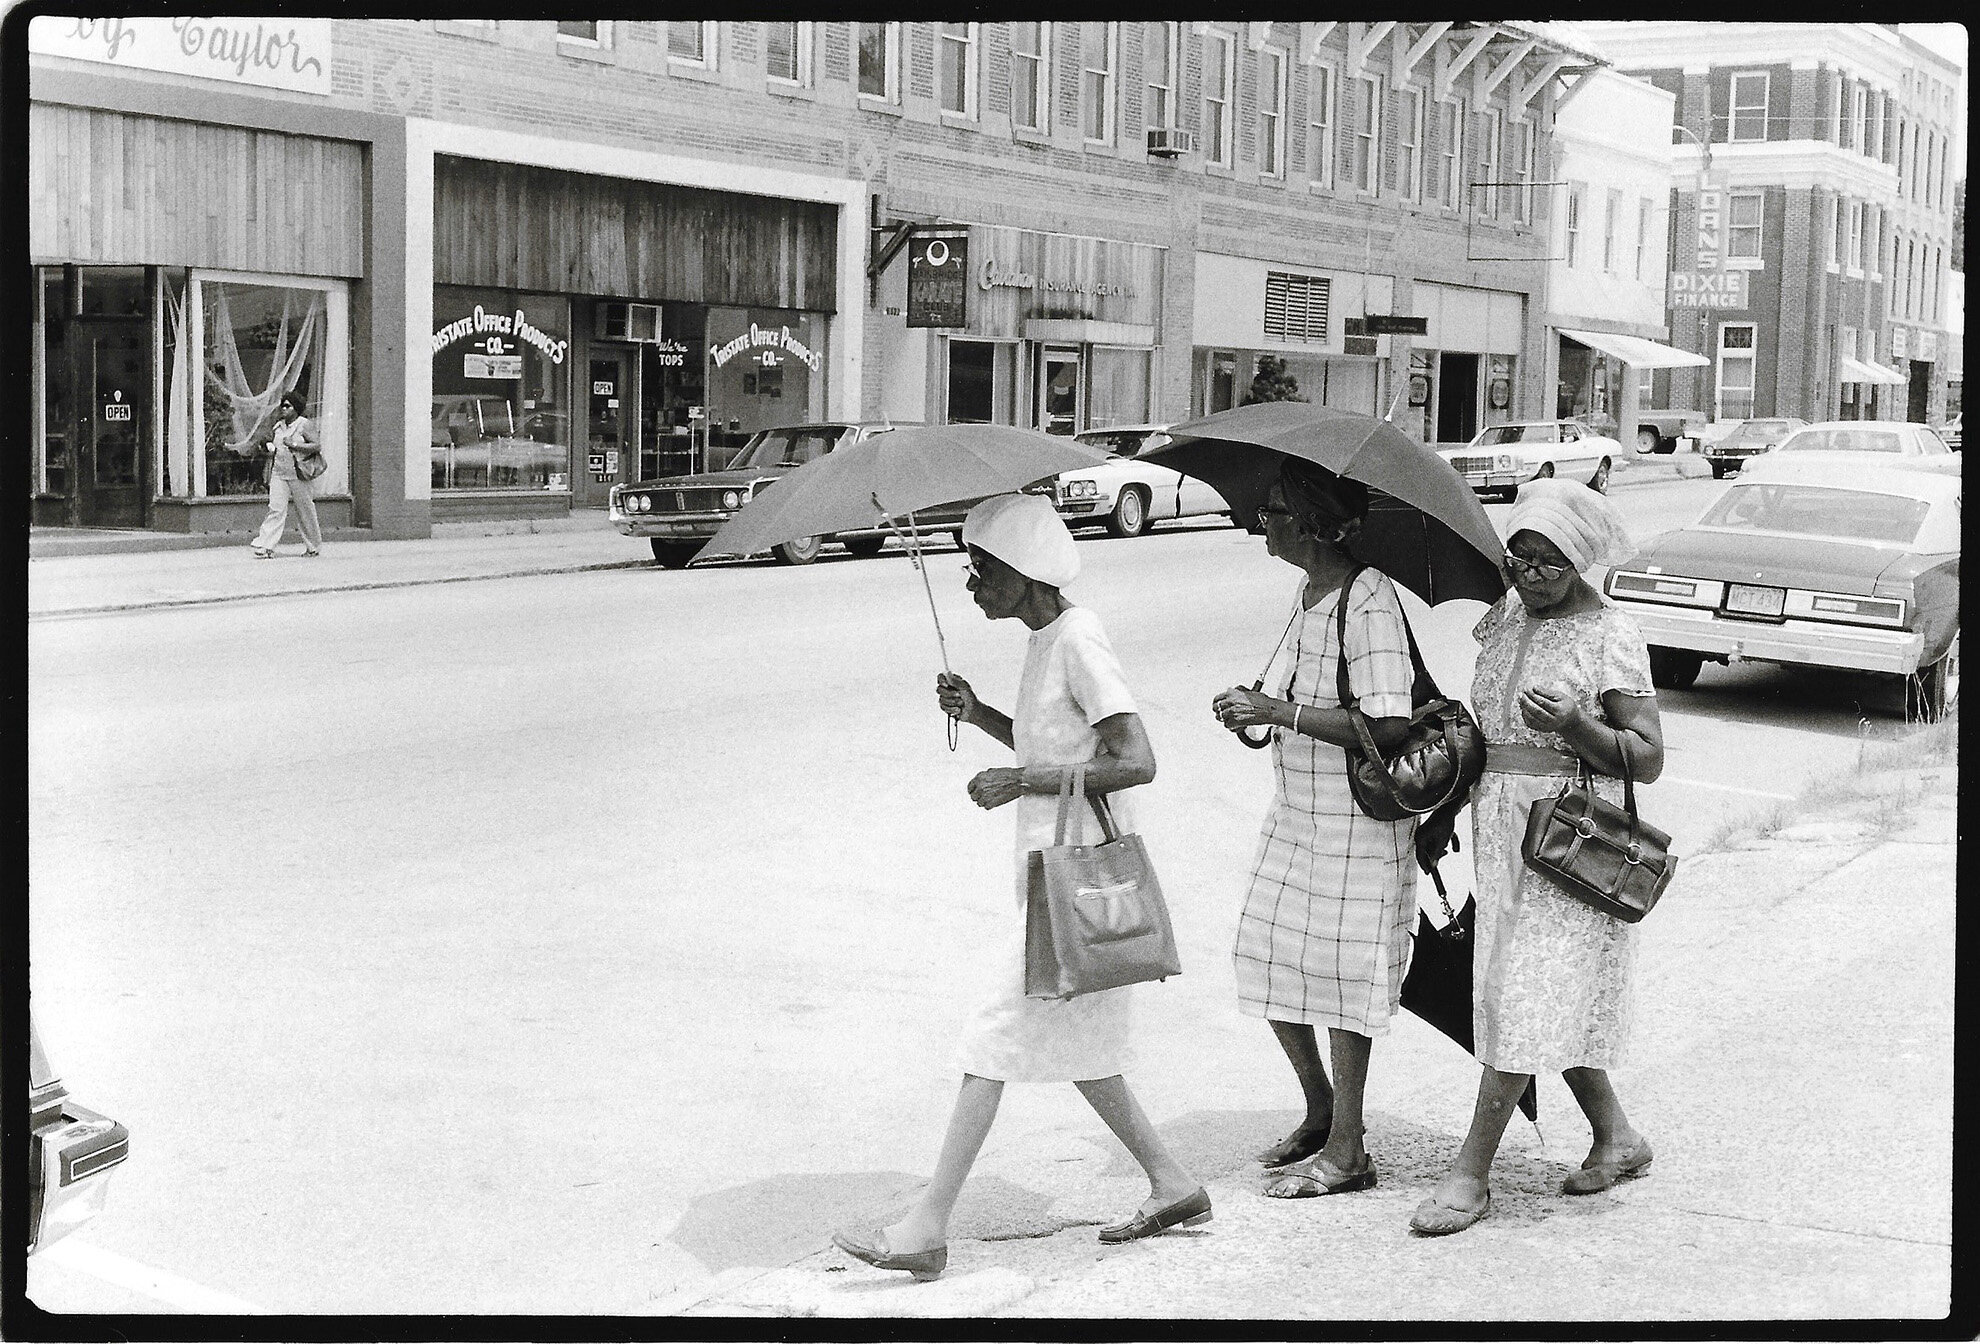   Women Crossing Broad Street, Bainbridge, GA,  1978 Gelatin silver print 6 x 8 3/4 in. (image size) The Do Good Fund, Inc., 2020-057 